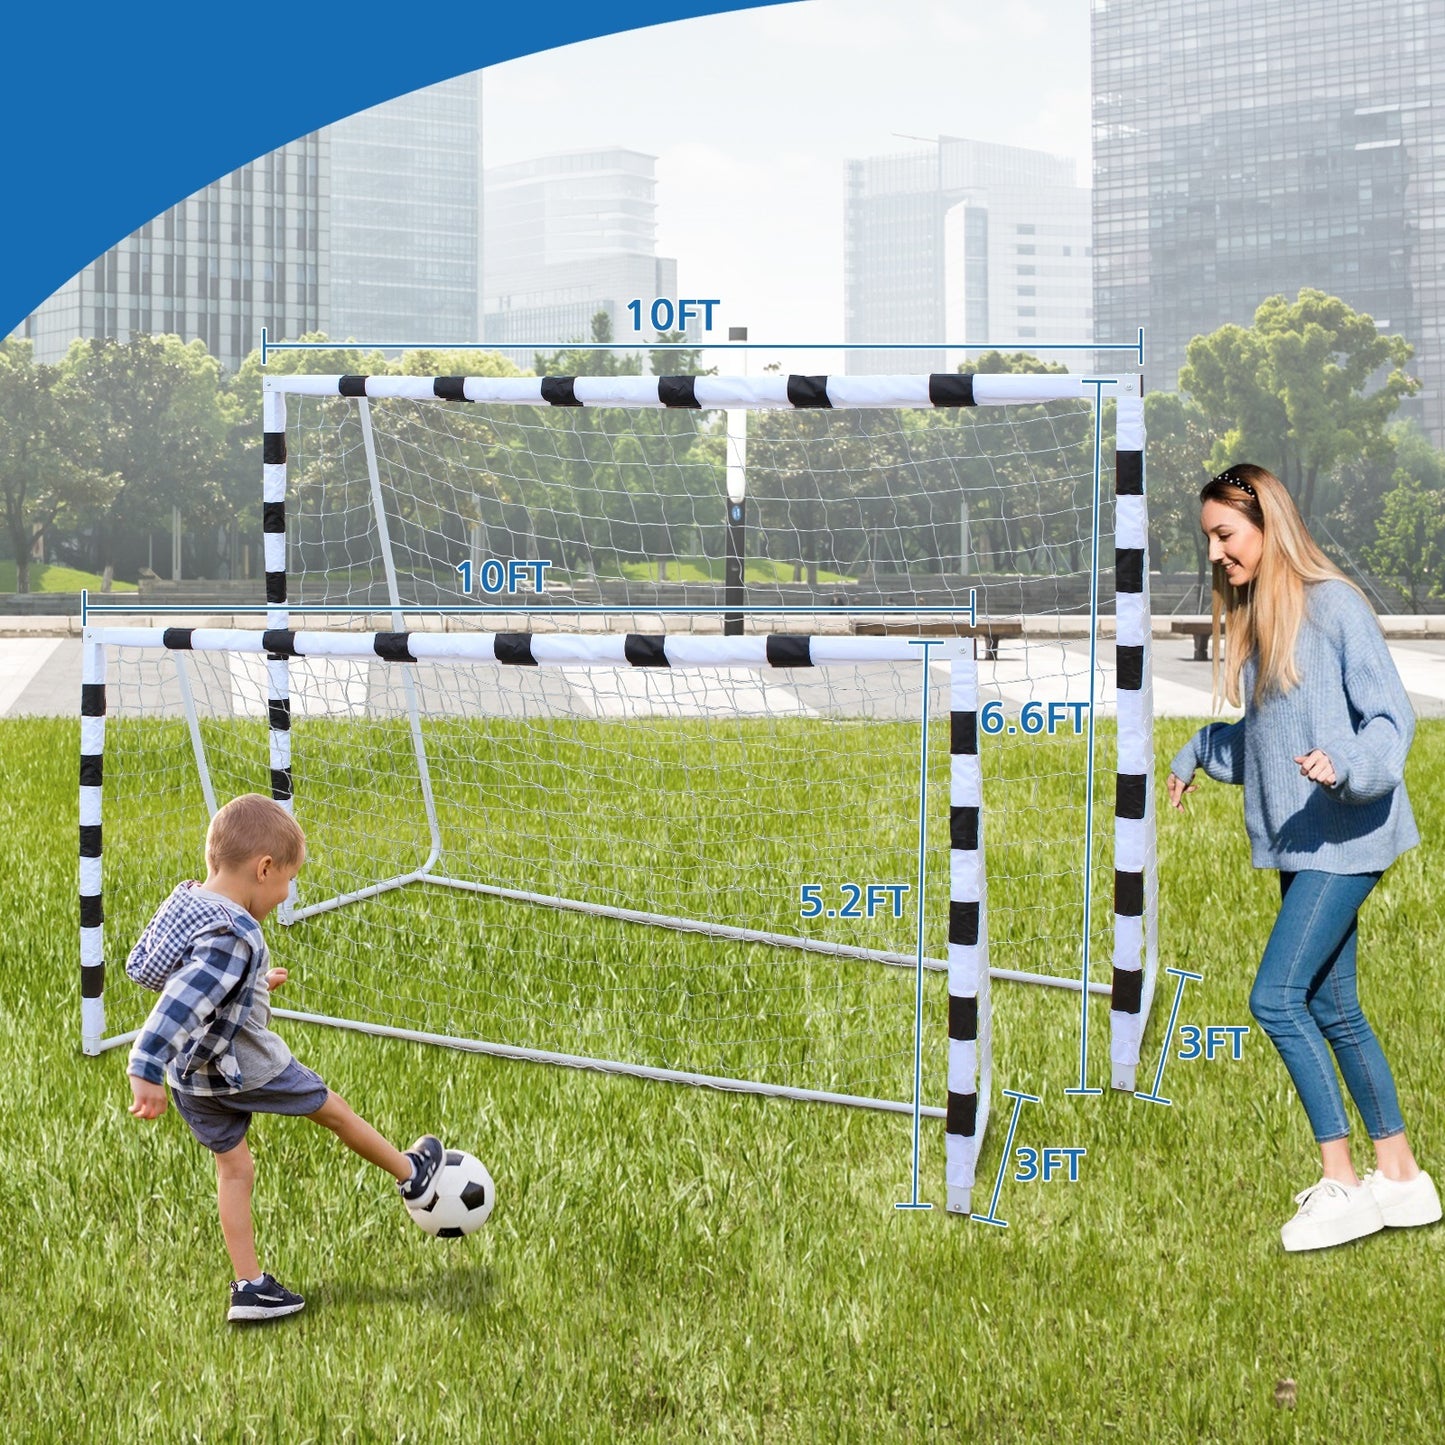 Portable Soccer Door Frame 5.2ft High, Soccer Door, Courtyard Park for Youth Soccer Matches